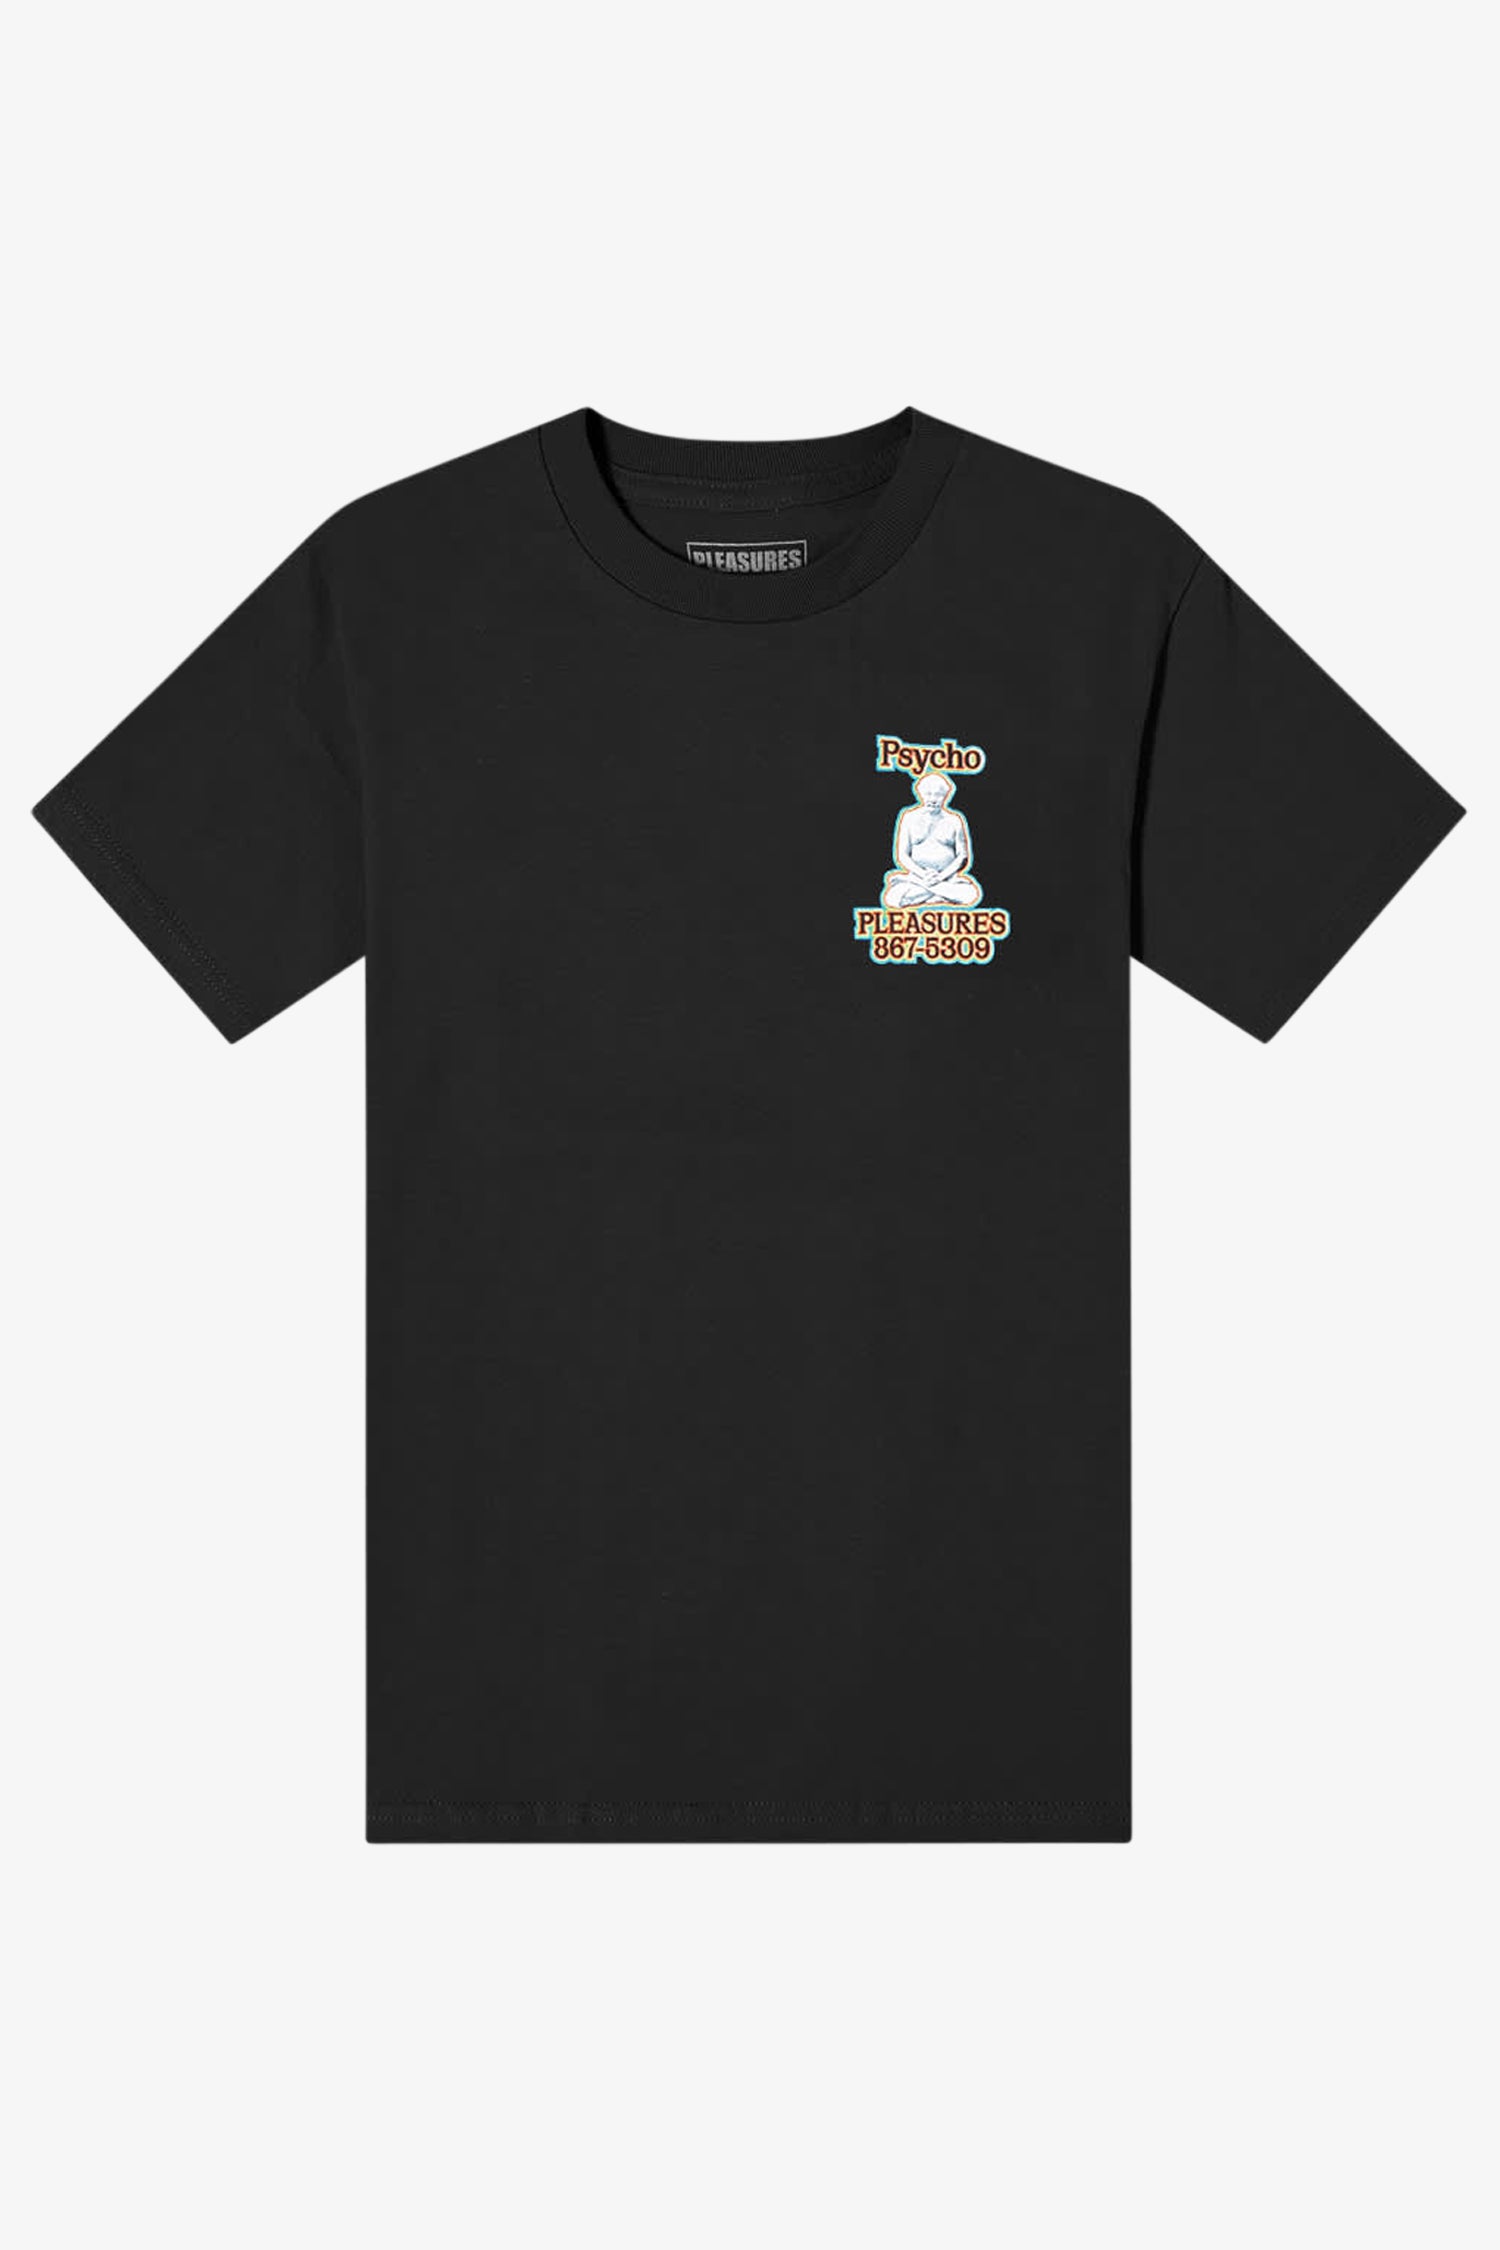 Selectshop FRAME - PLEASURES Psycho T-Shirt T-Shirt Dubai